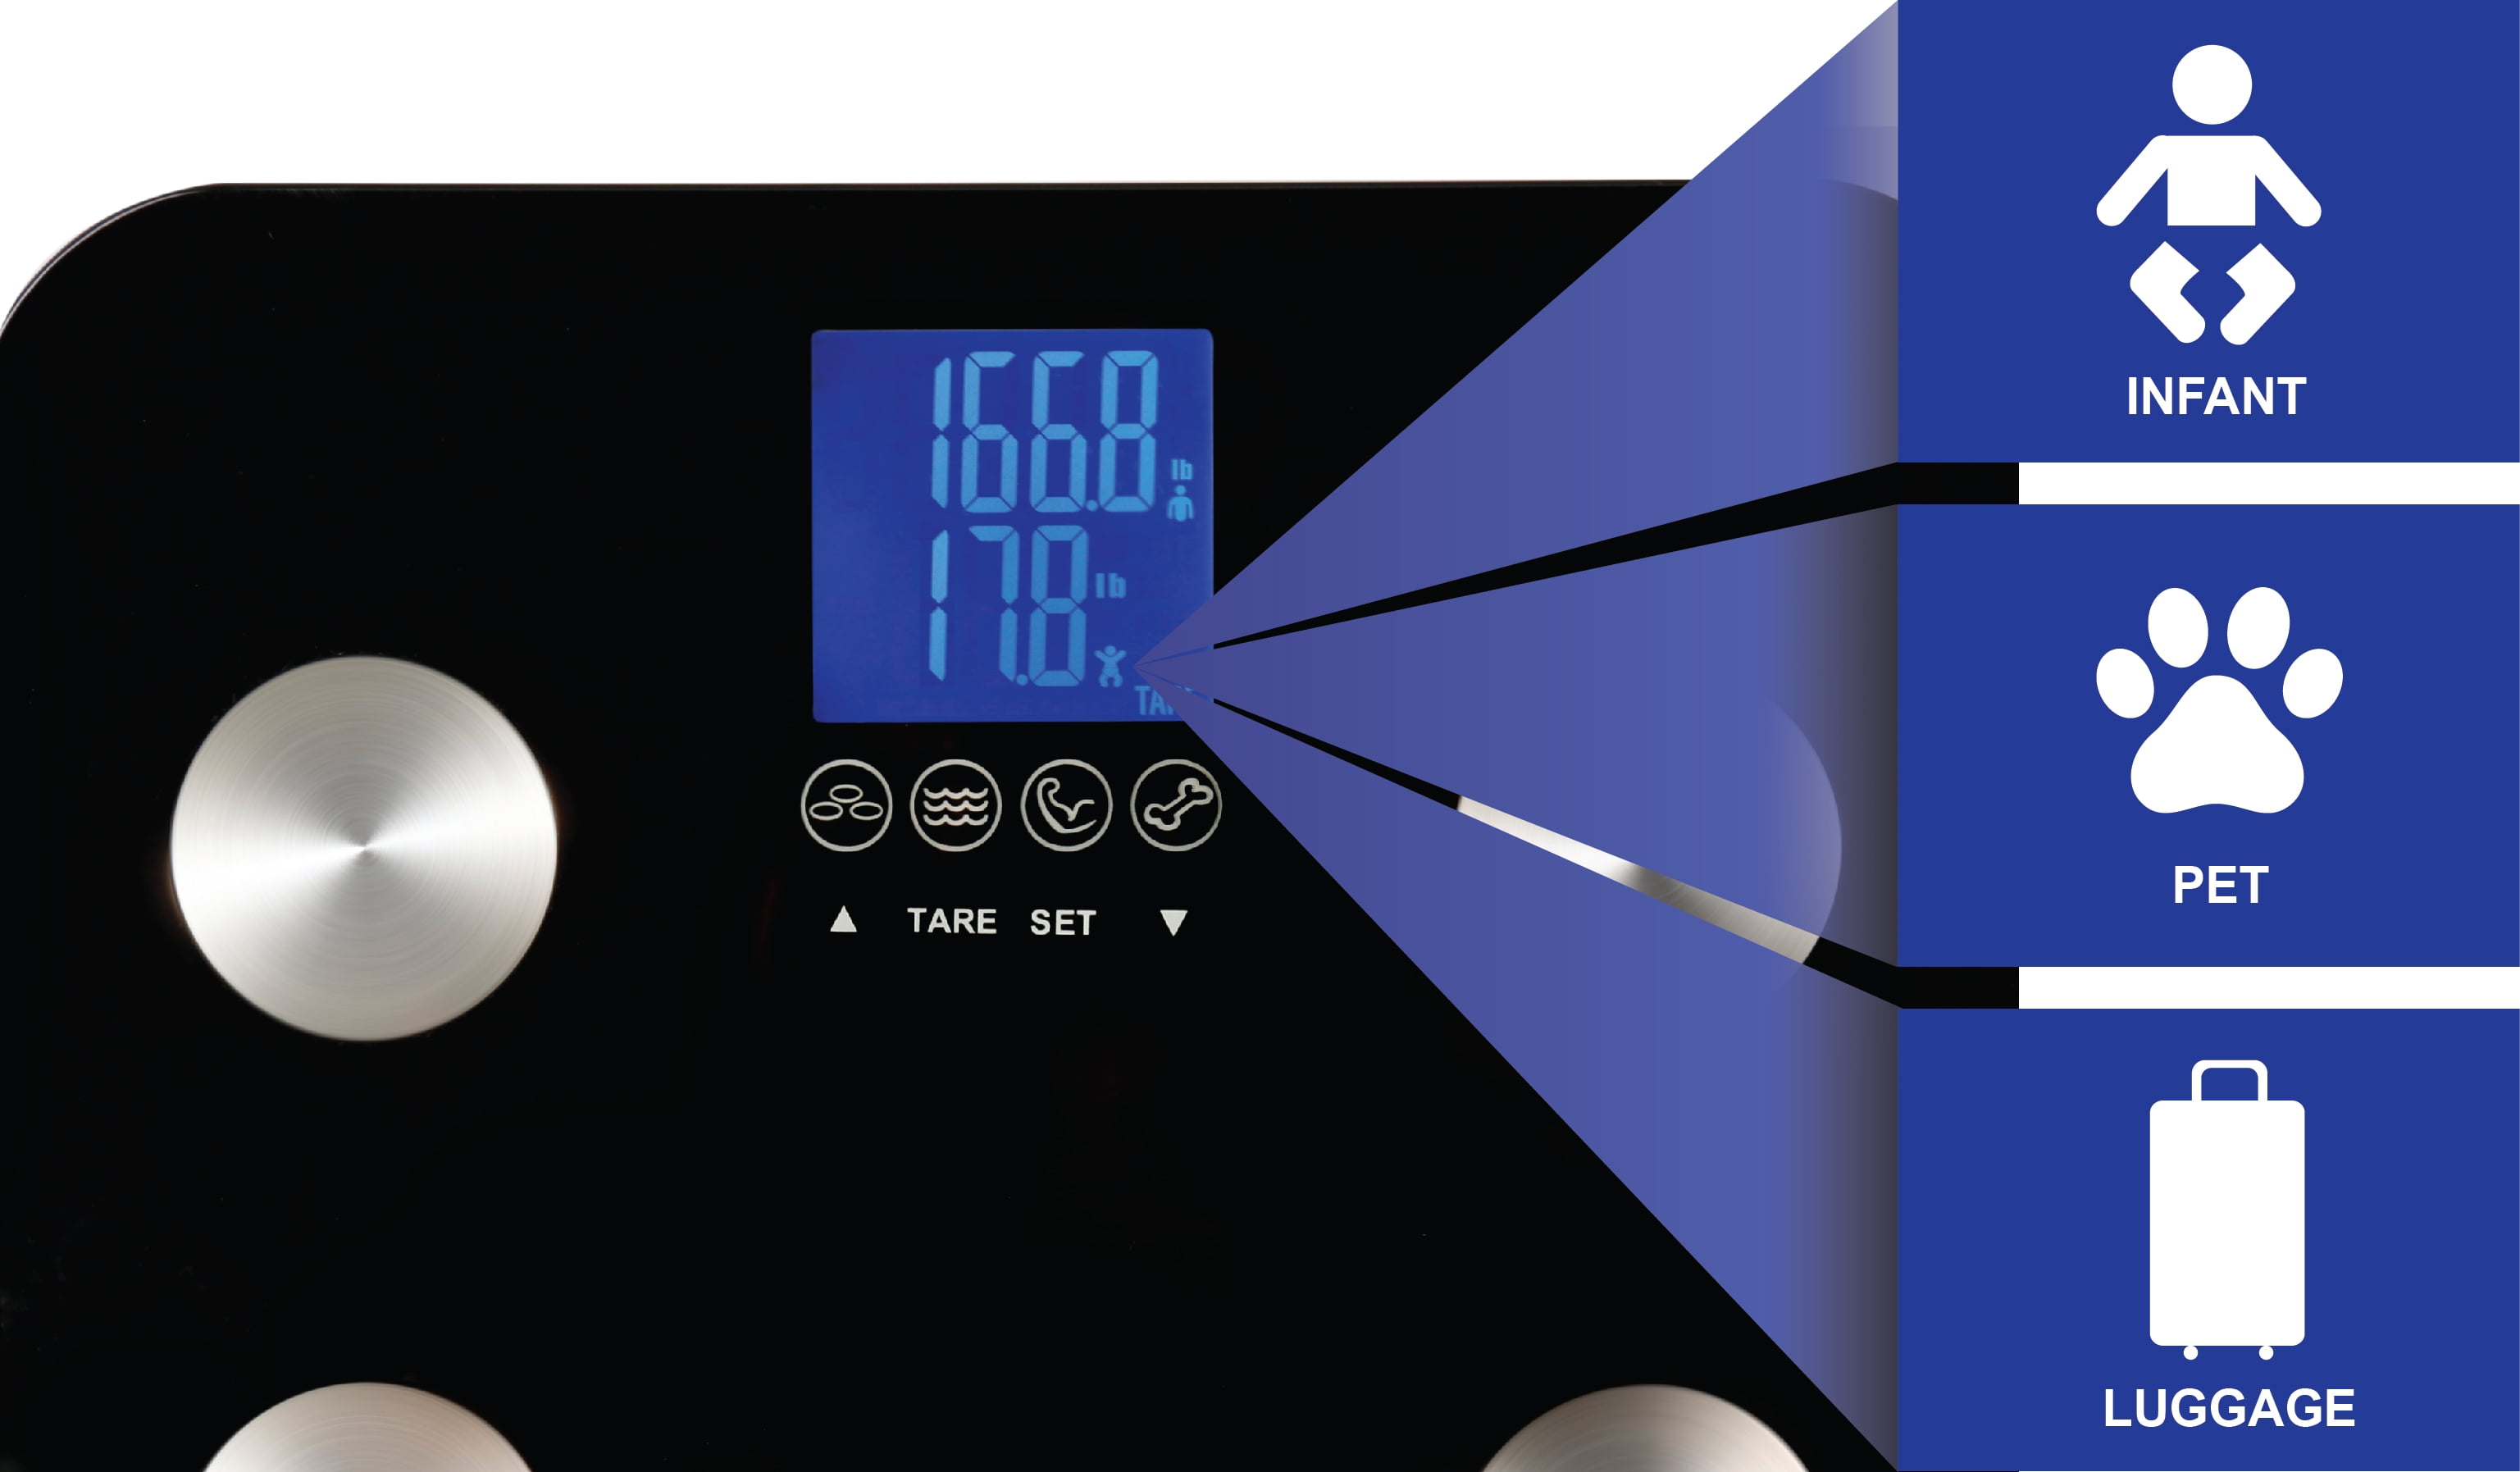 Ozeri ProMax 560 lbs. / 255 kg Bath Scale, with 0.1 lbs. / 0.05 kg